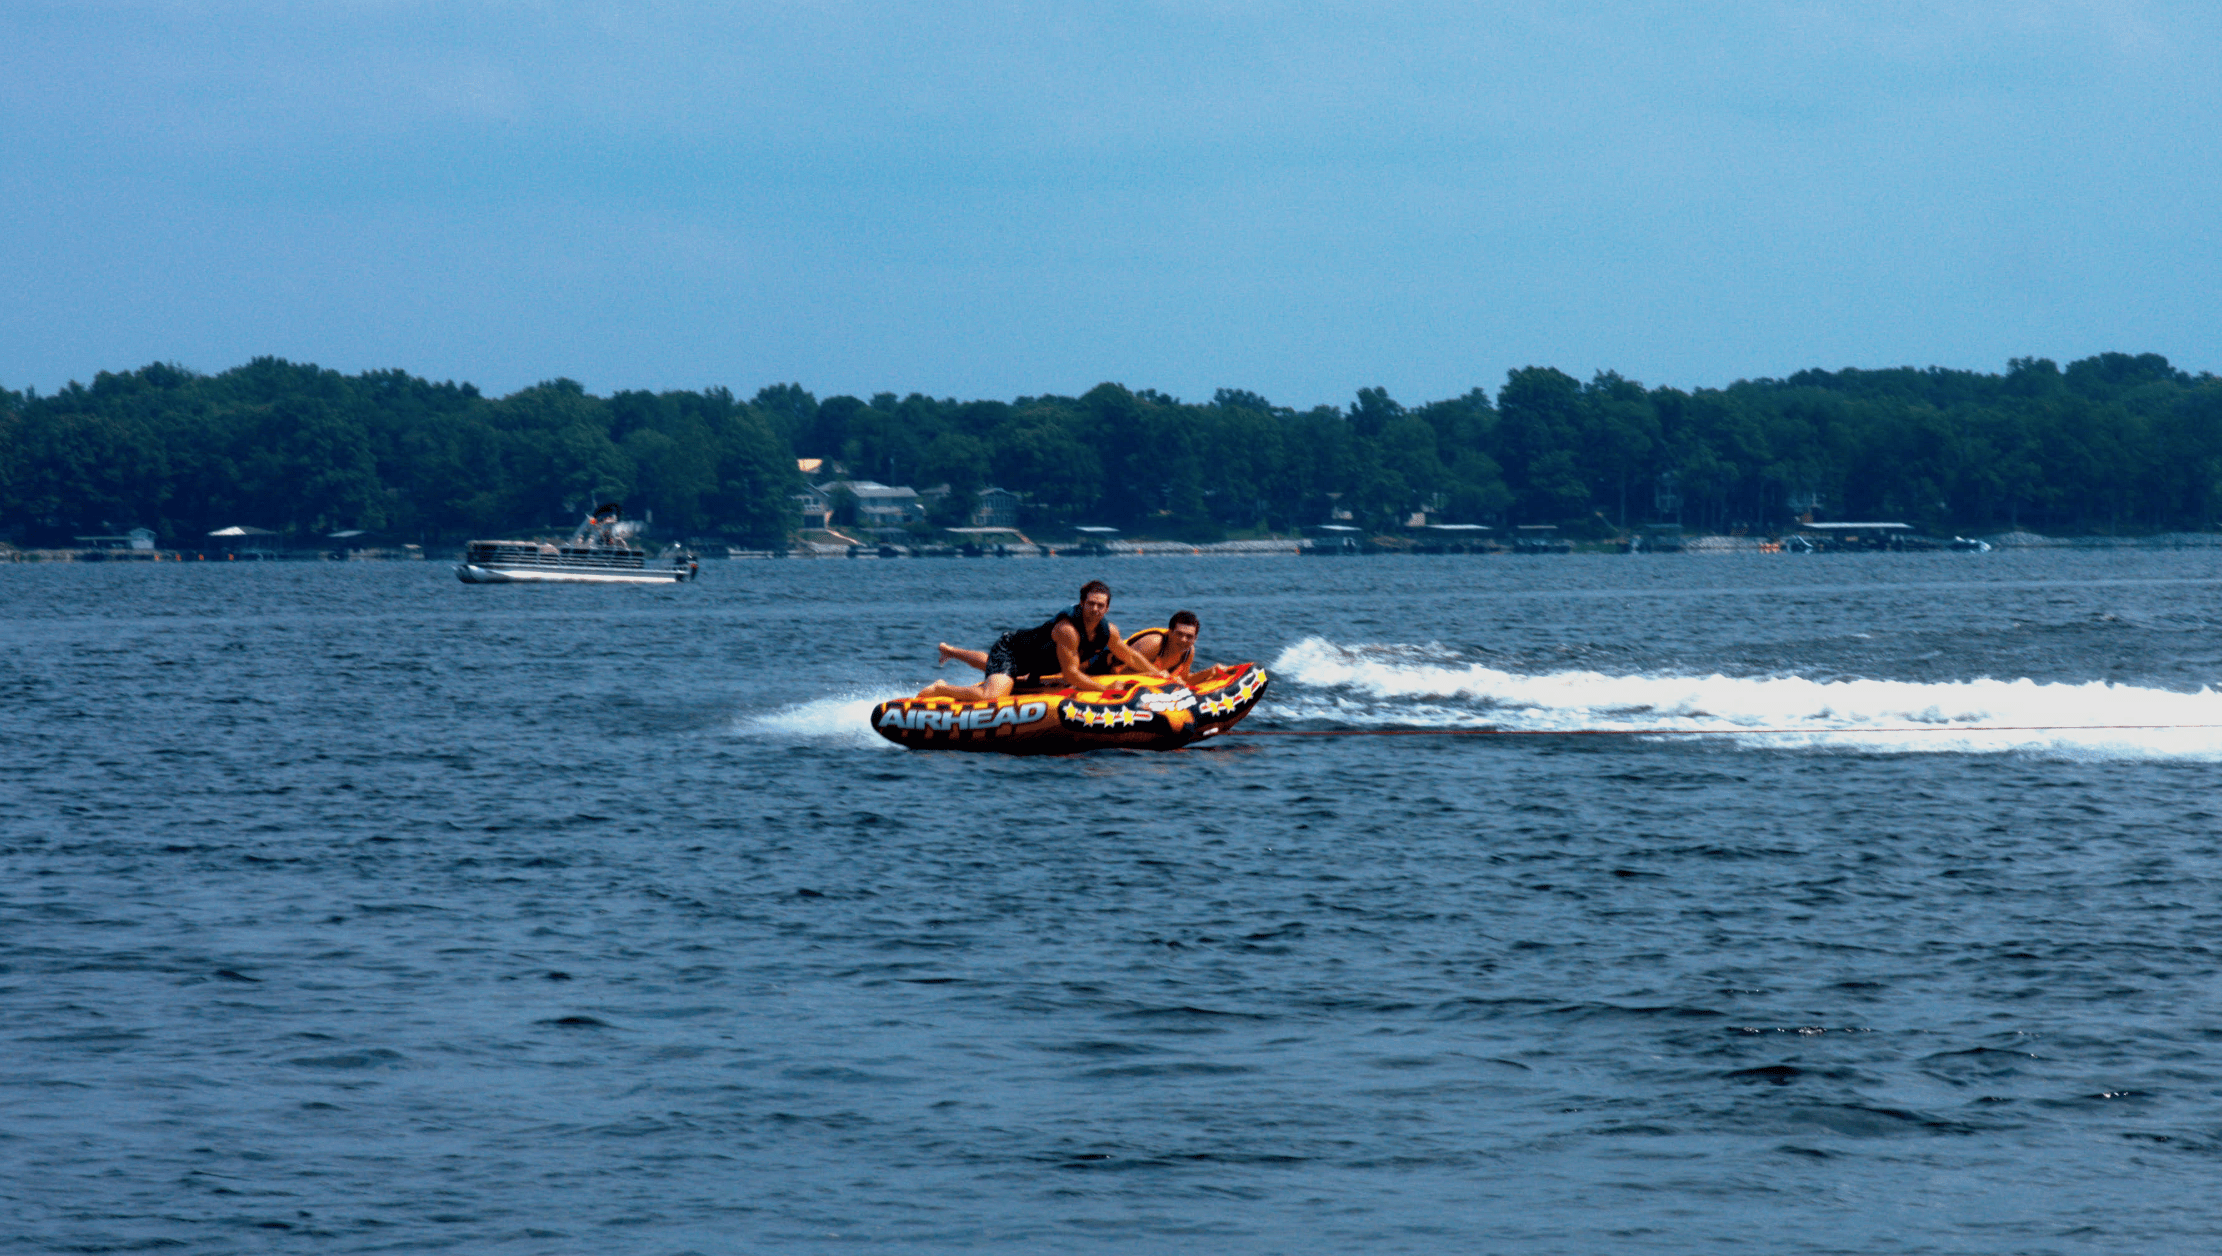 Two men riding tube on the Lake of Egypt in Southern Illinois